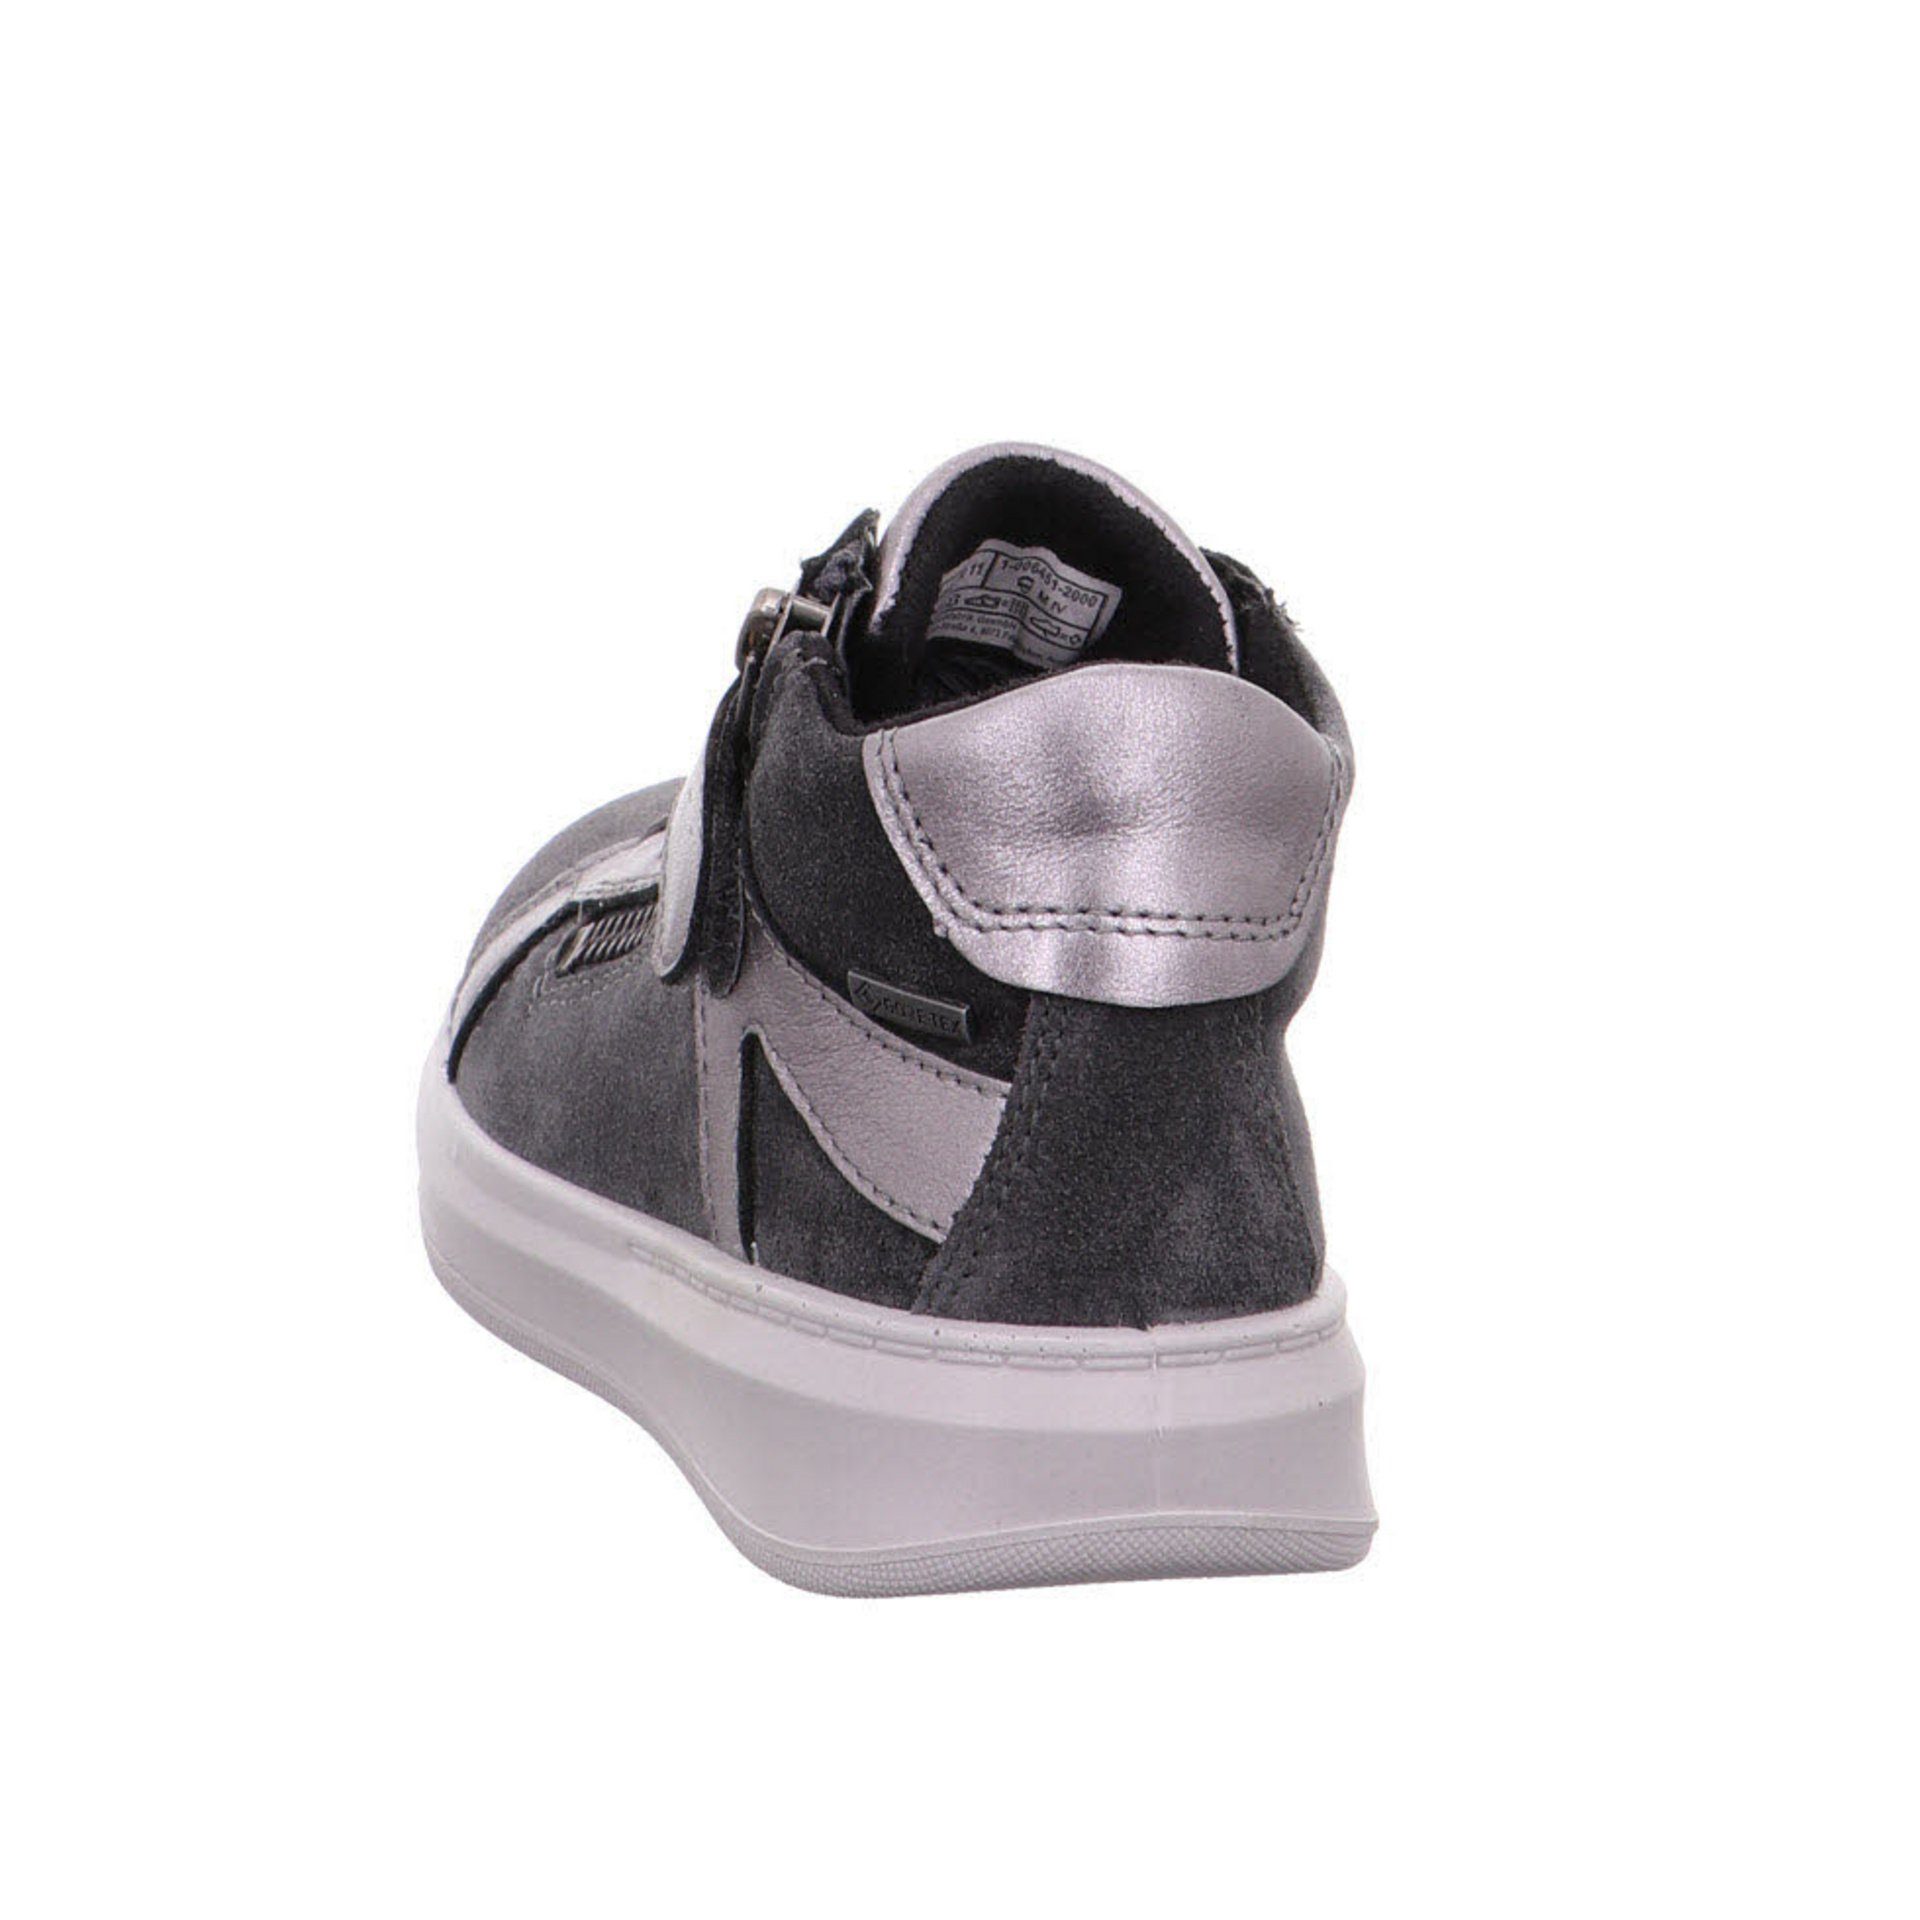 Superfit Cosmo Mädchen Lederkombination Schuhe Stiefelette Stiefel grau Sneaker Kinderschuhe